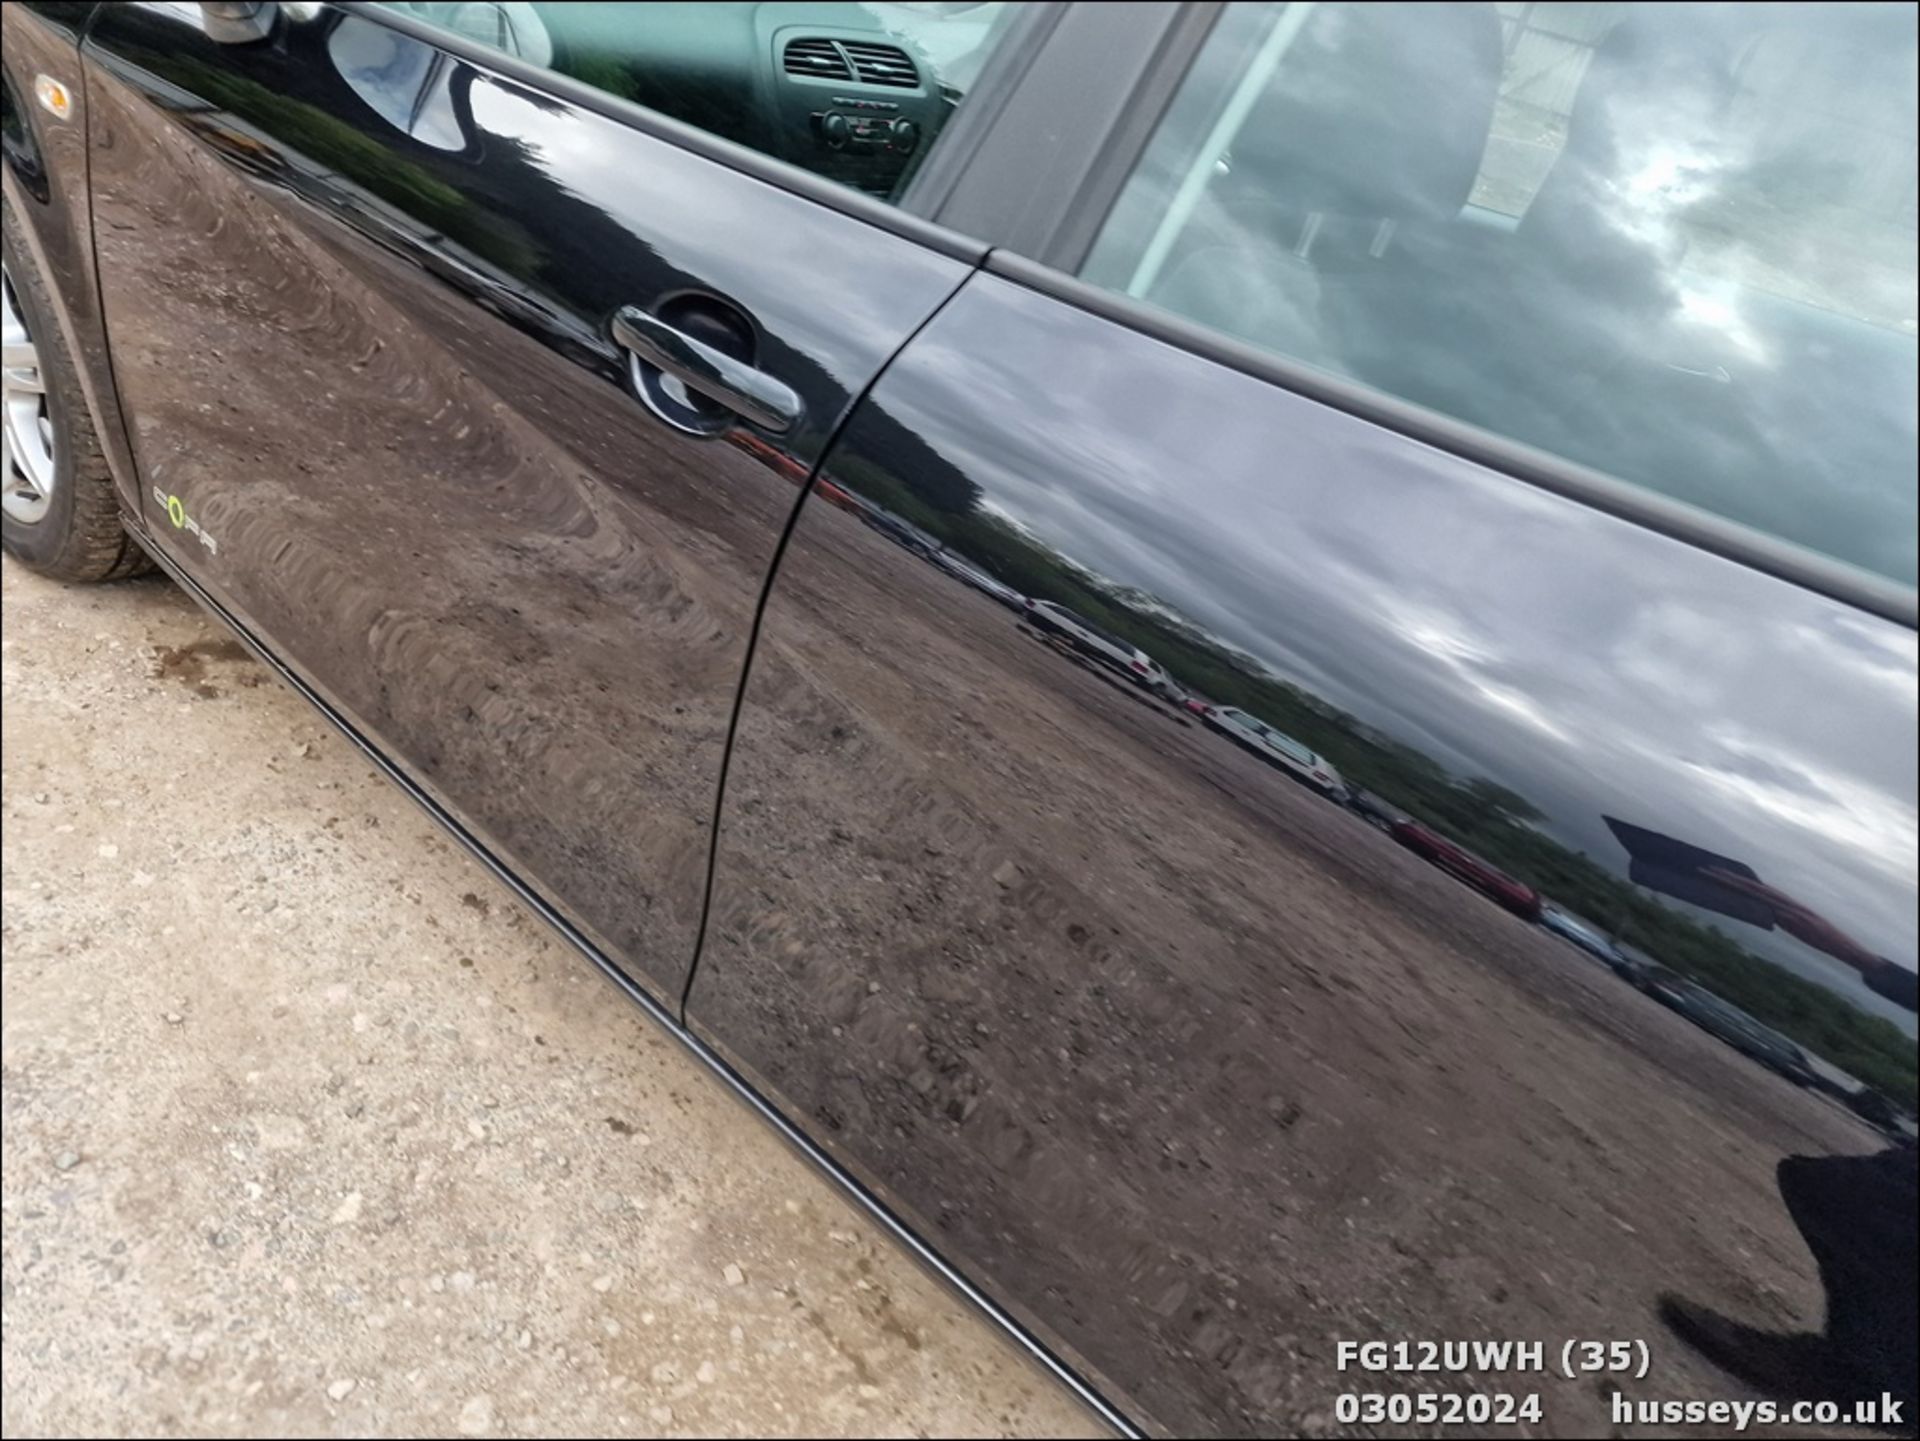 12/12 SEAT LEON S COPA CR TDI ECOMOT - 1598cc 5dr Hatchback (Black, 123k) - Image 36 of 45